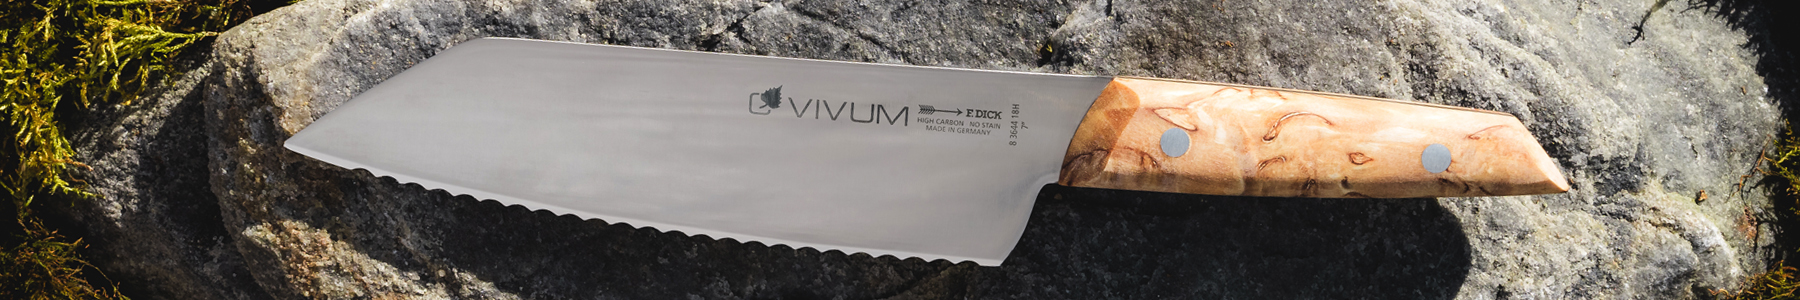 FDick VIVUM series utility knife displayed in an image banner